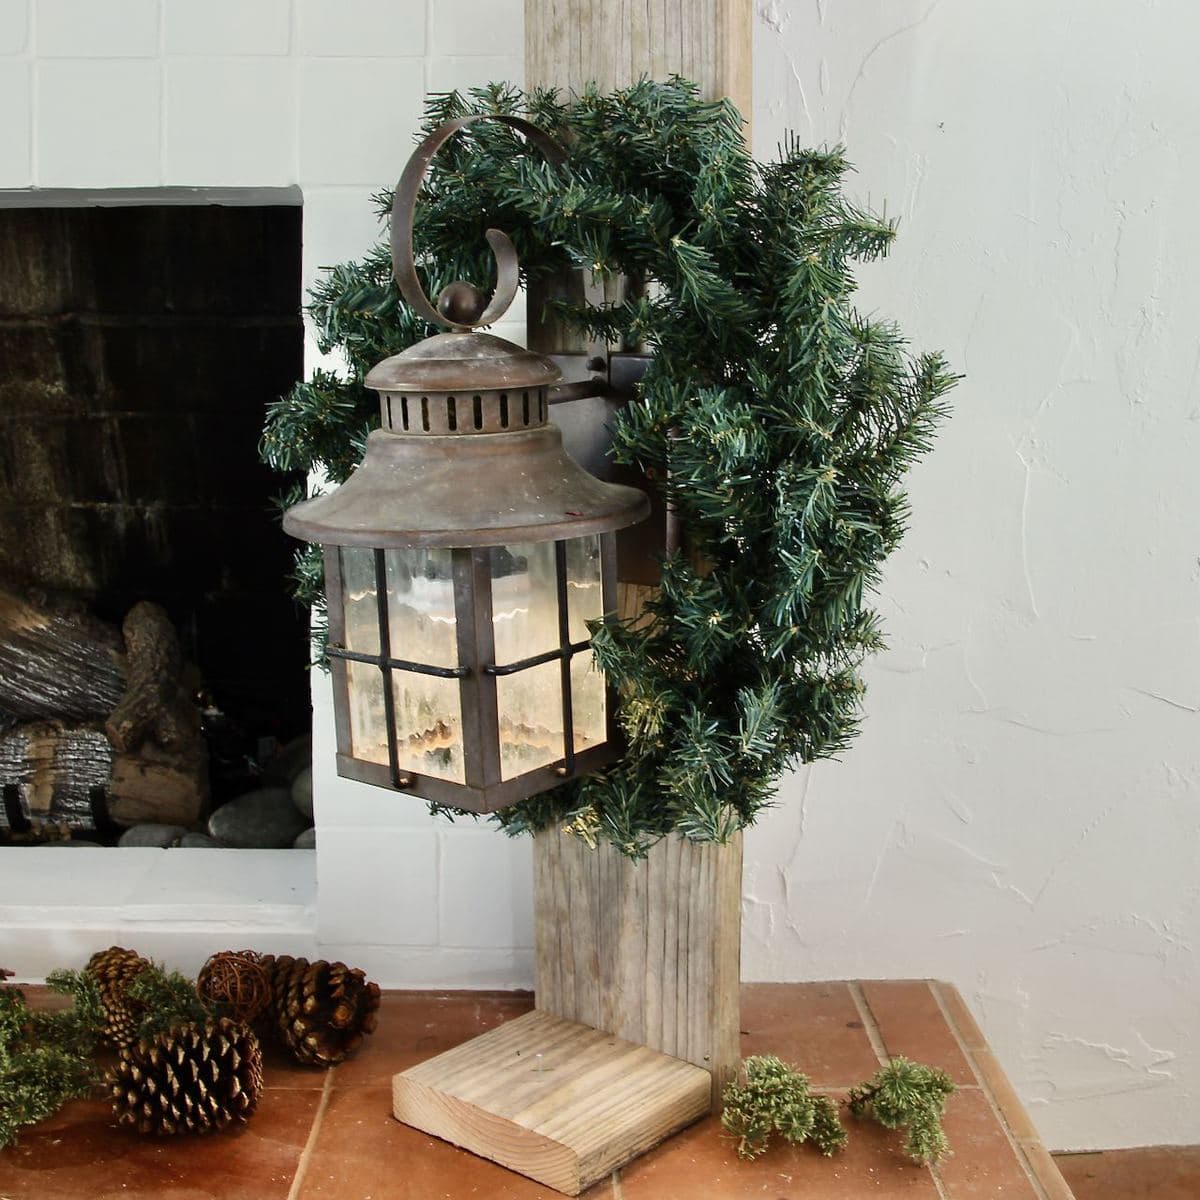 Vintage Lantern on Wood Post with Simple wreath hanging on it.